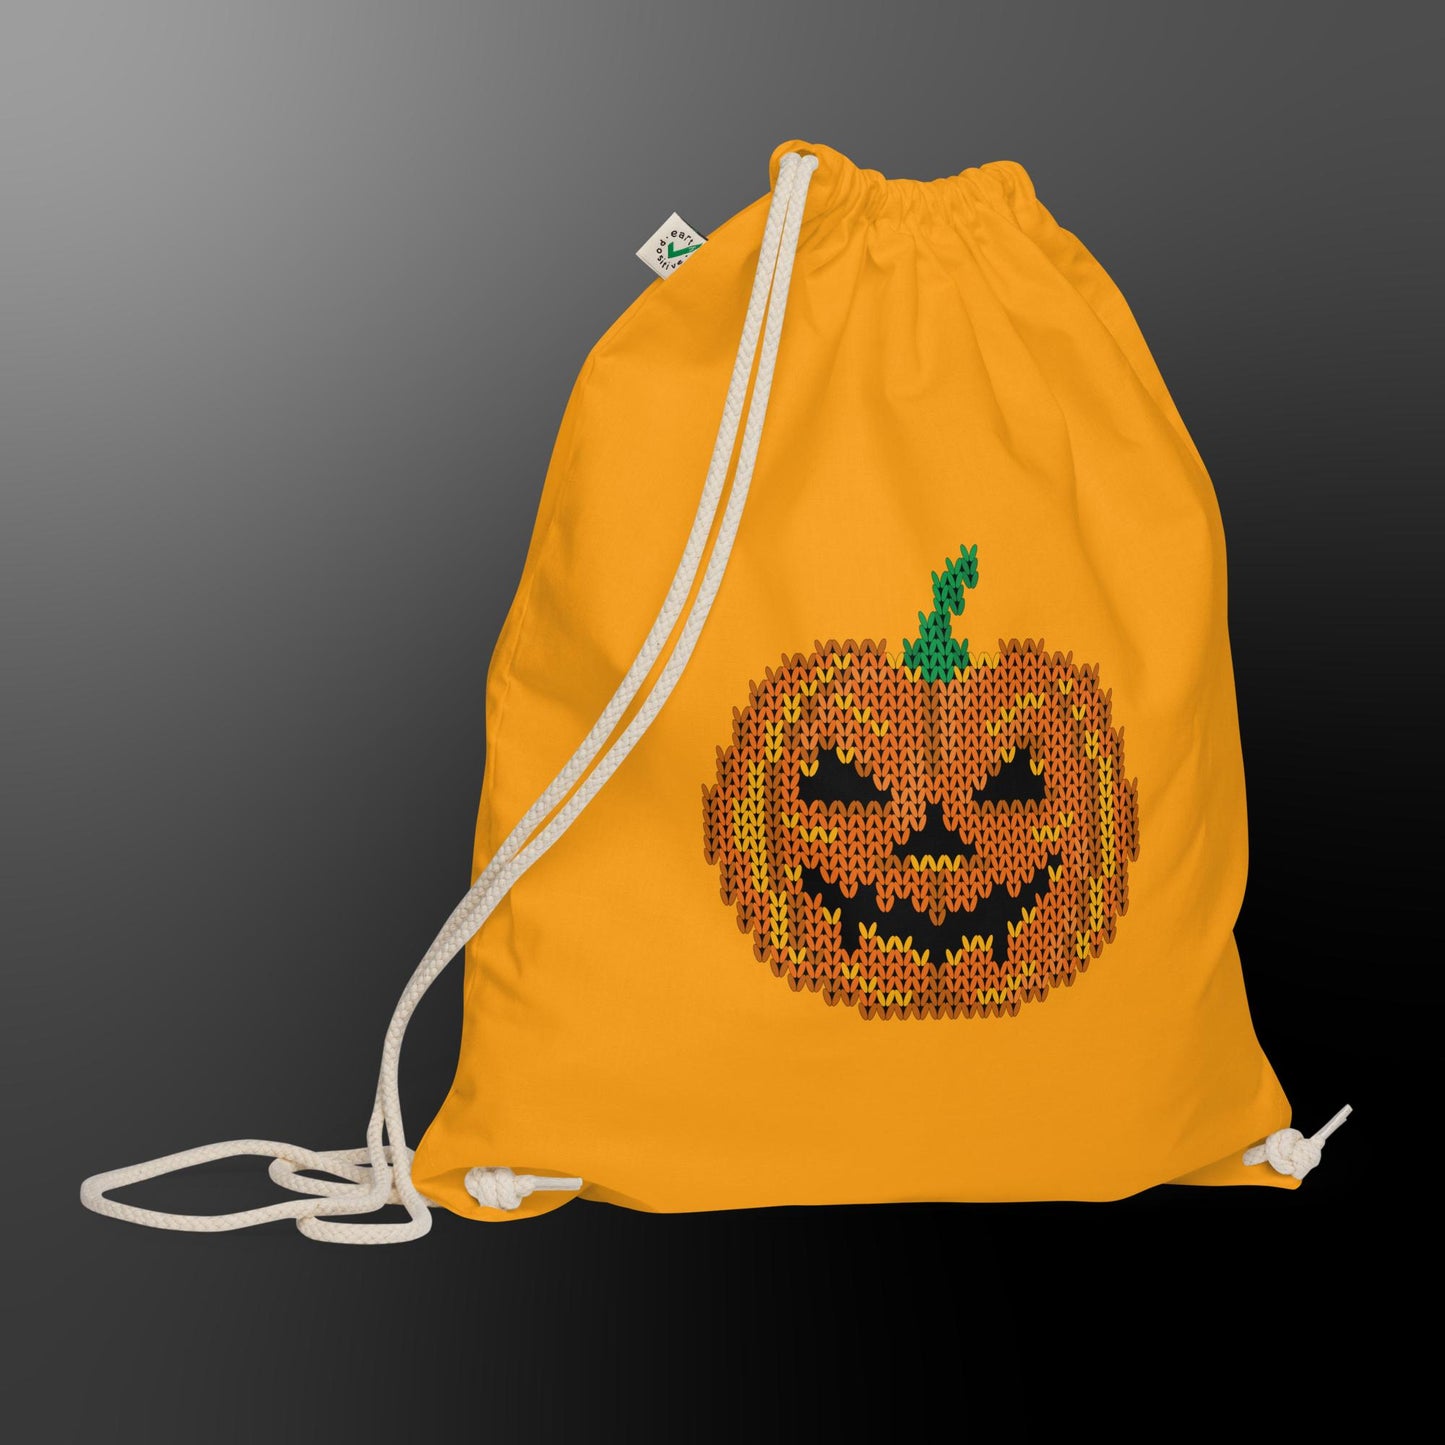 Halloween sports bag with pumpkin